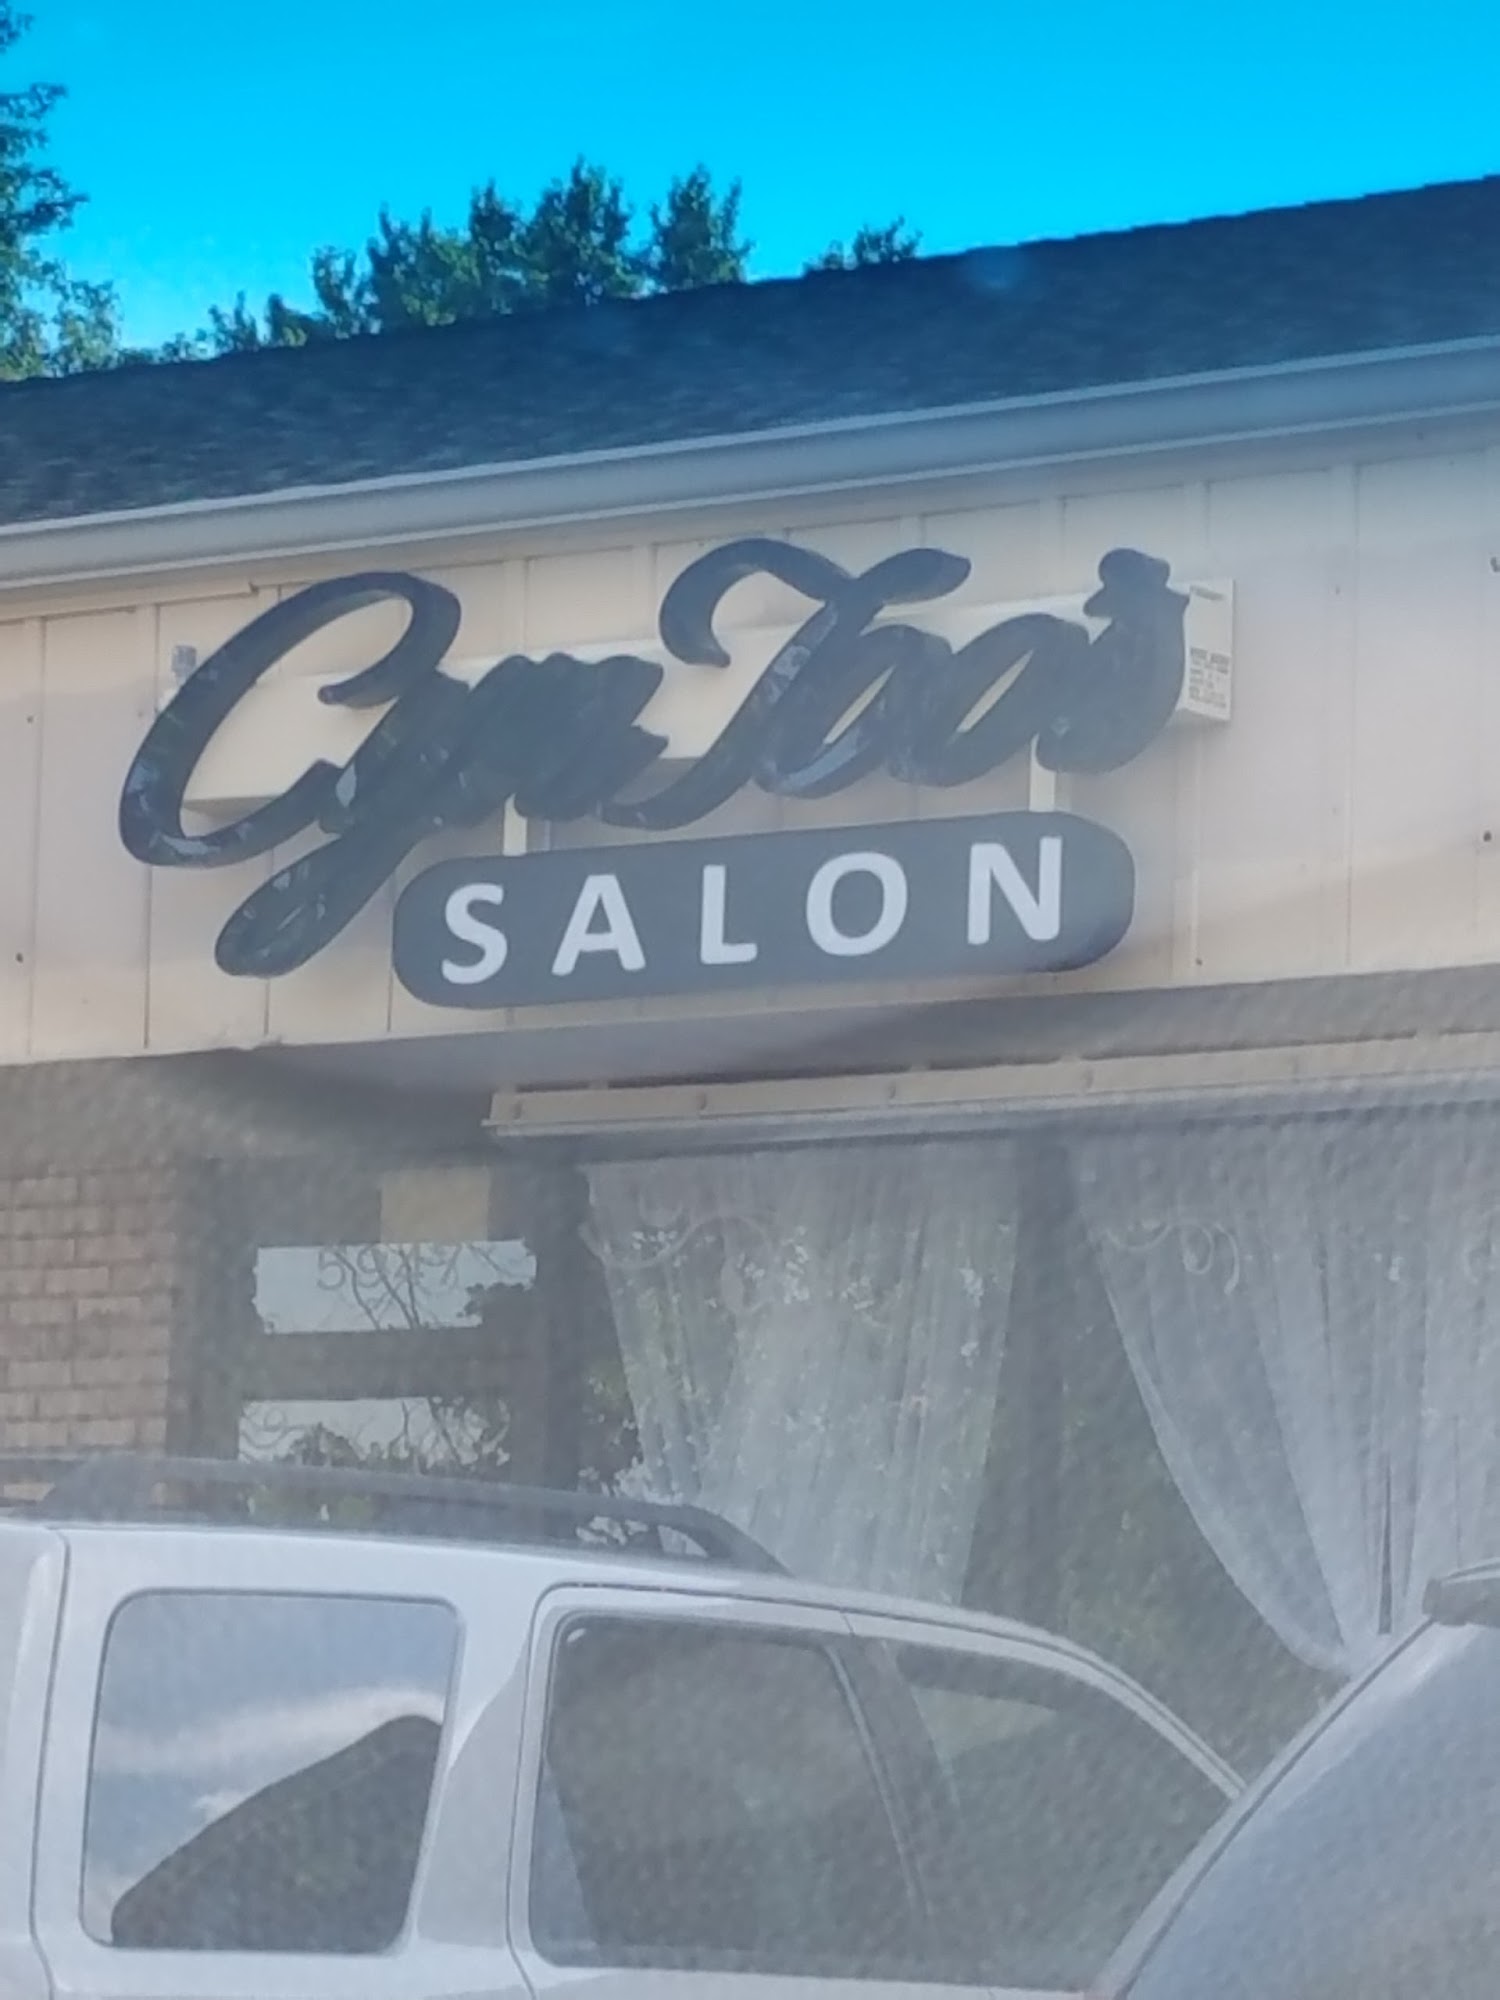 CynToo's Salon